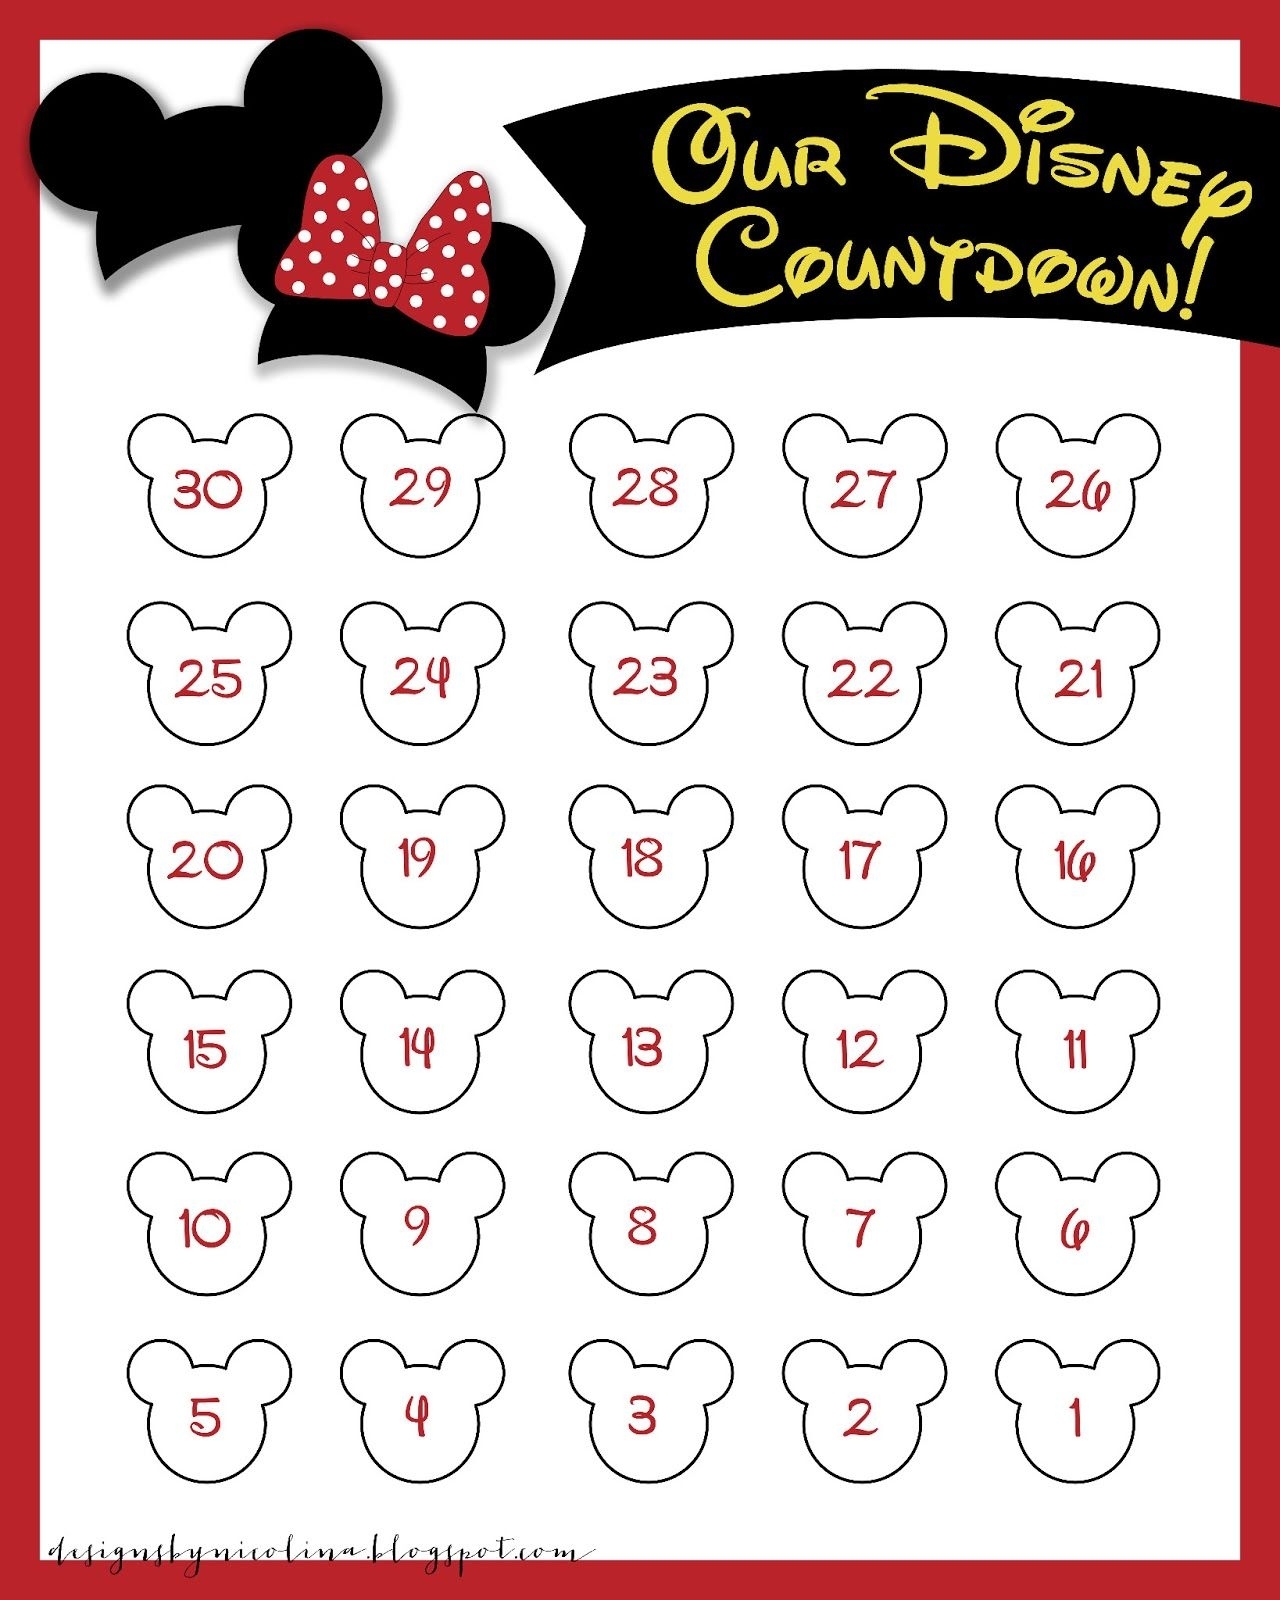 Disneyland Countdown Calendar | Designsnicolina: Disney for 99 Days To Disney Printable Calendar